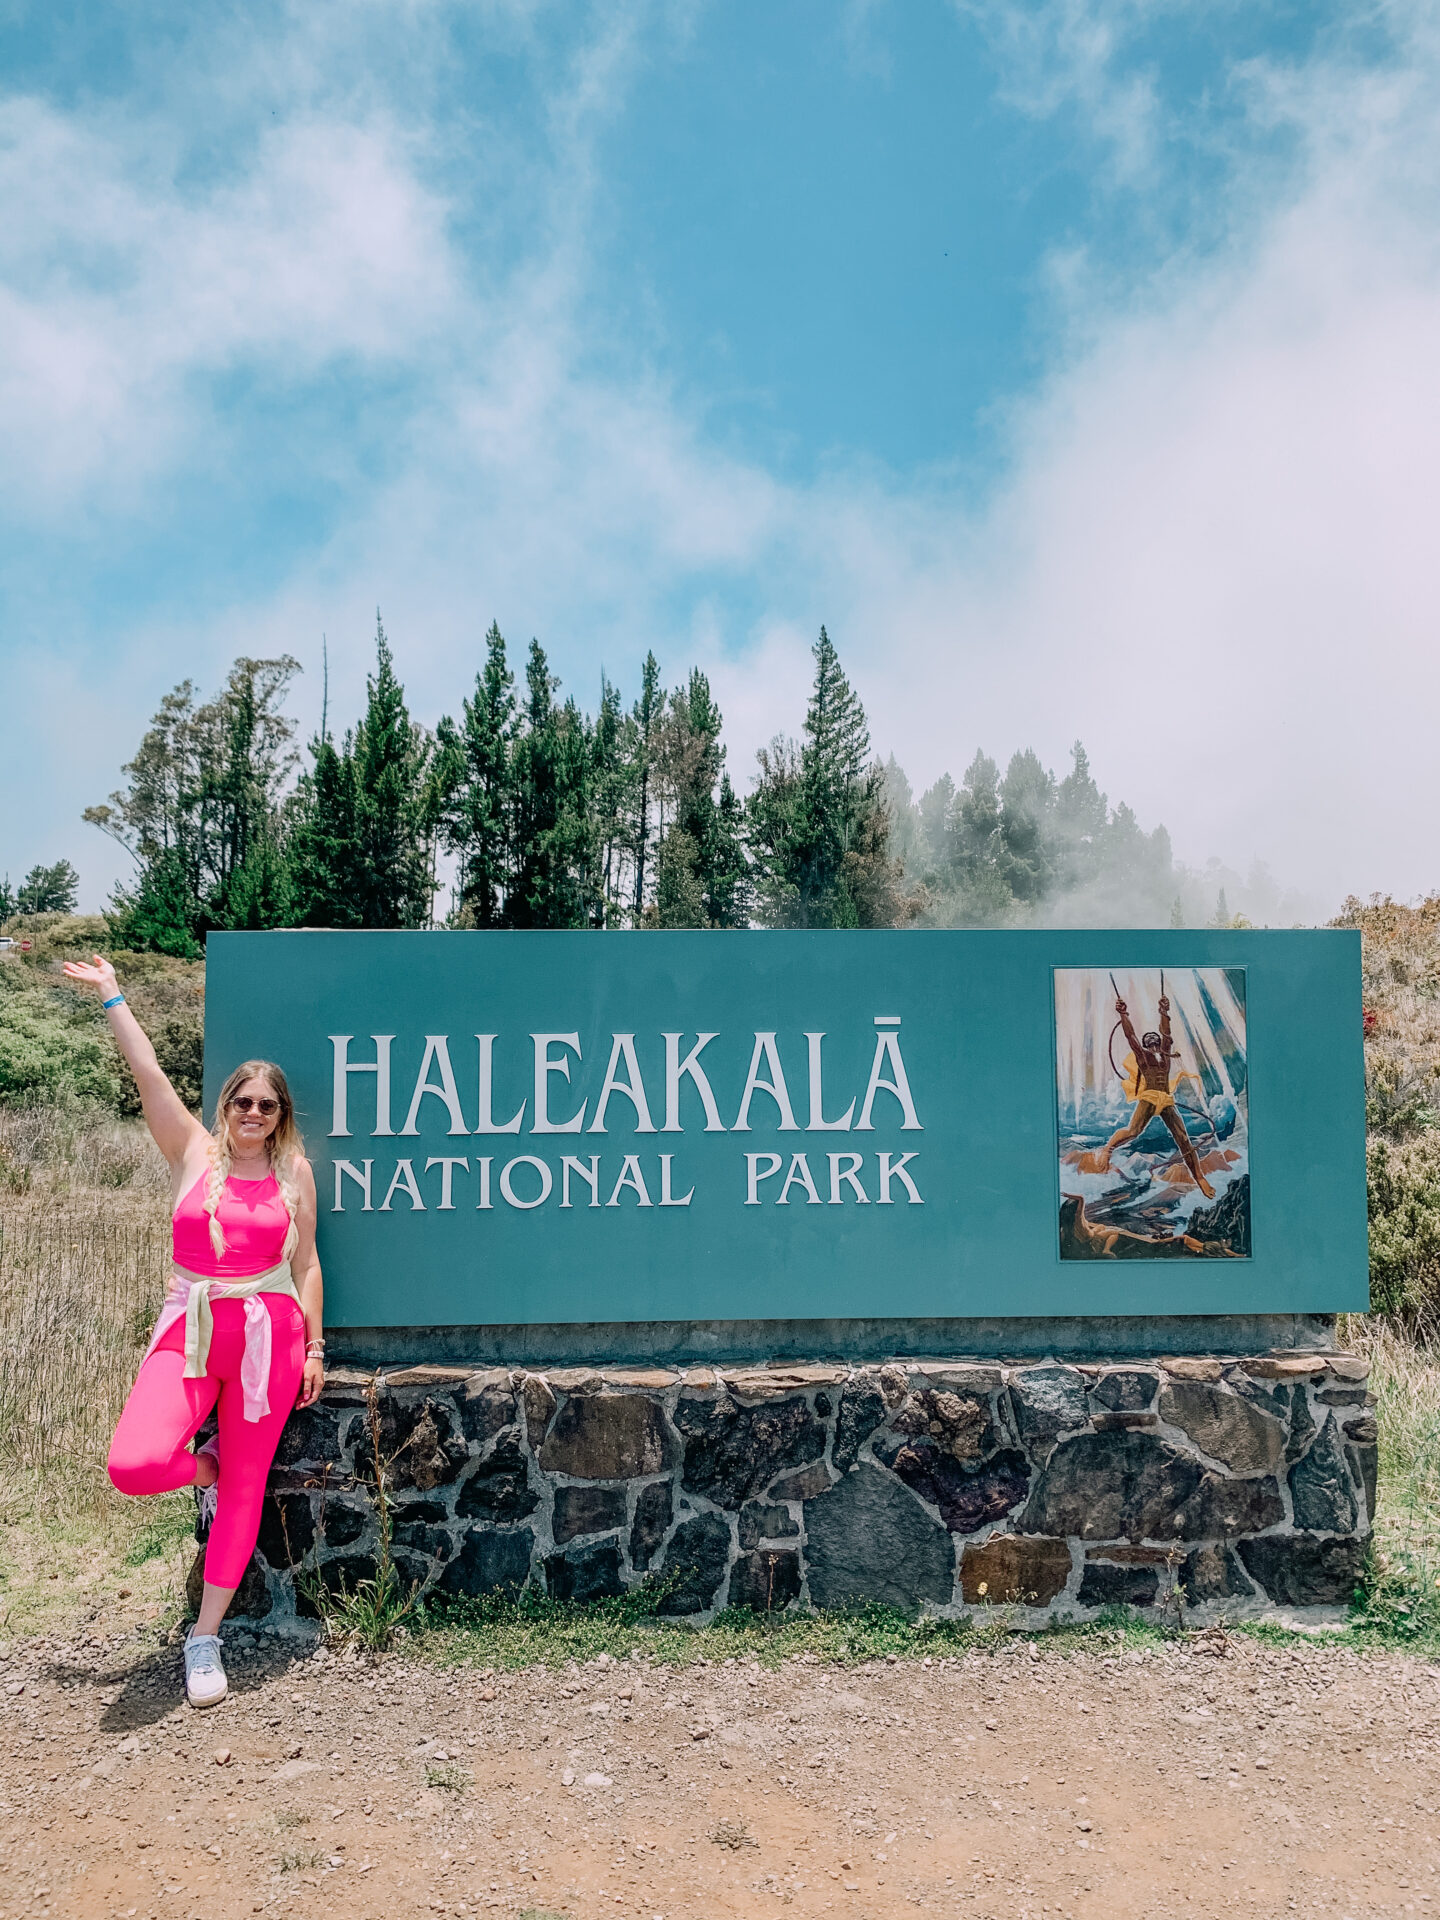 Our Day Trip to Haleakalā National Park in Maui, Hawaii